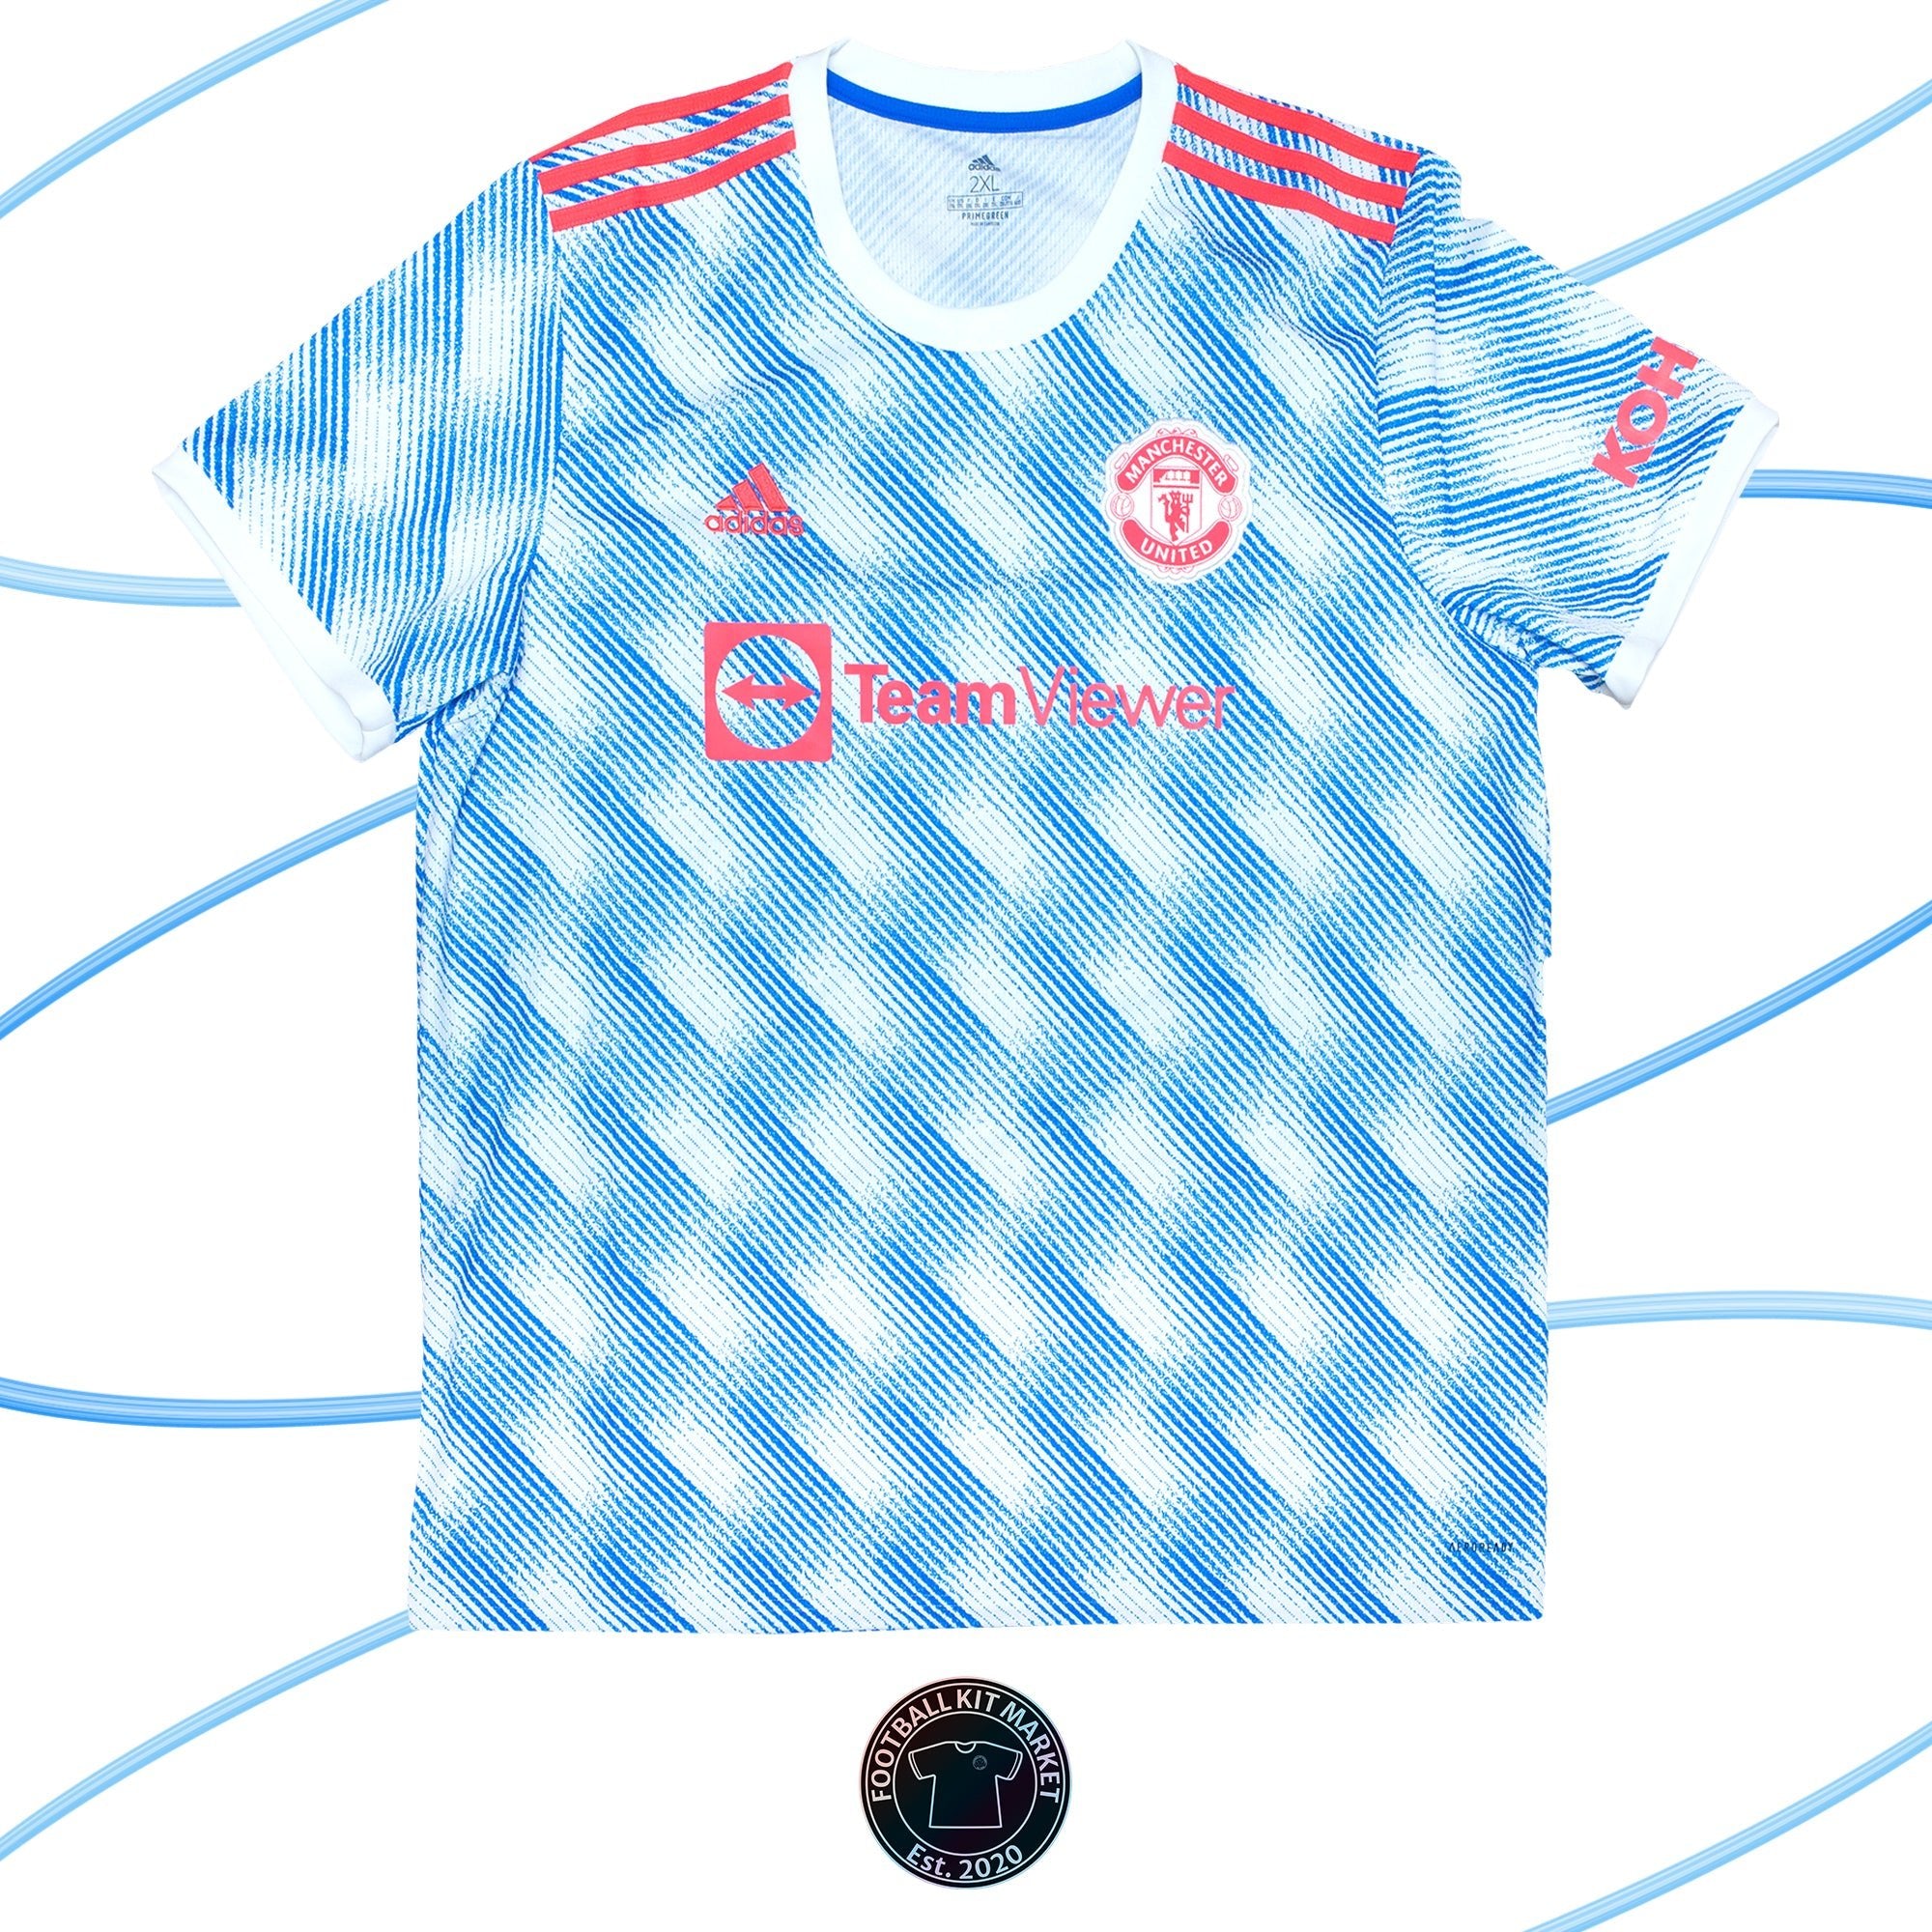 Genuine MANCHESTER UNITED Away Shirt (2021-2022) - ADIDAS (XXL) - Product Image from Football Kit Market